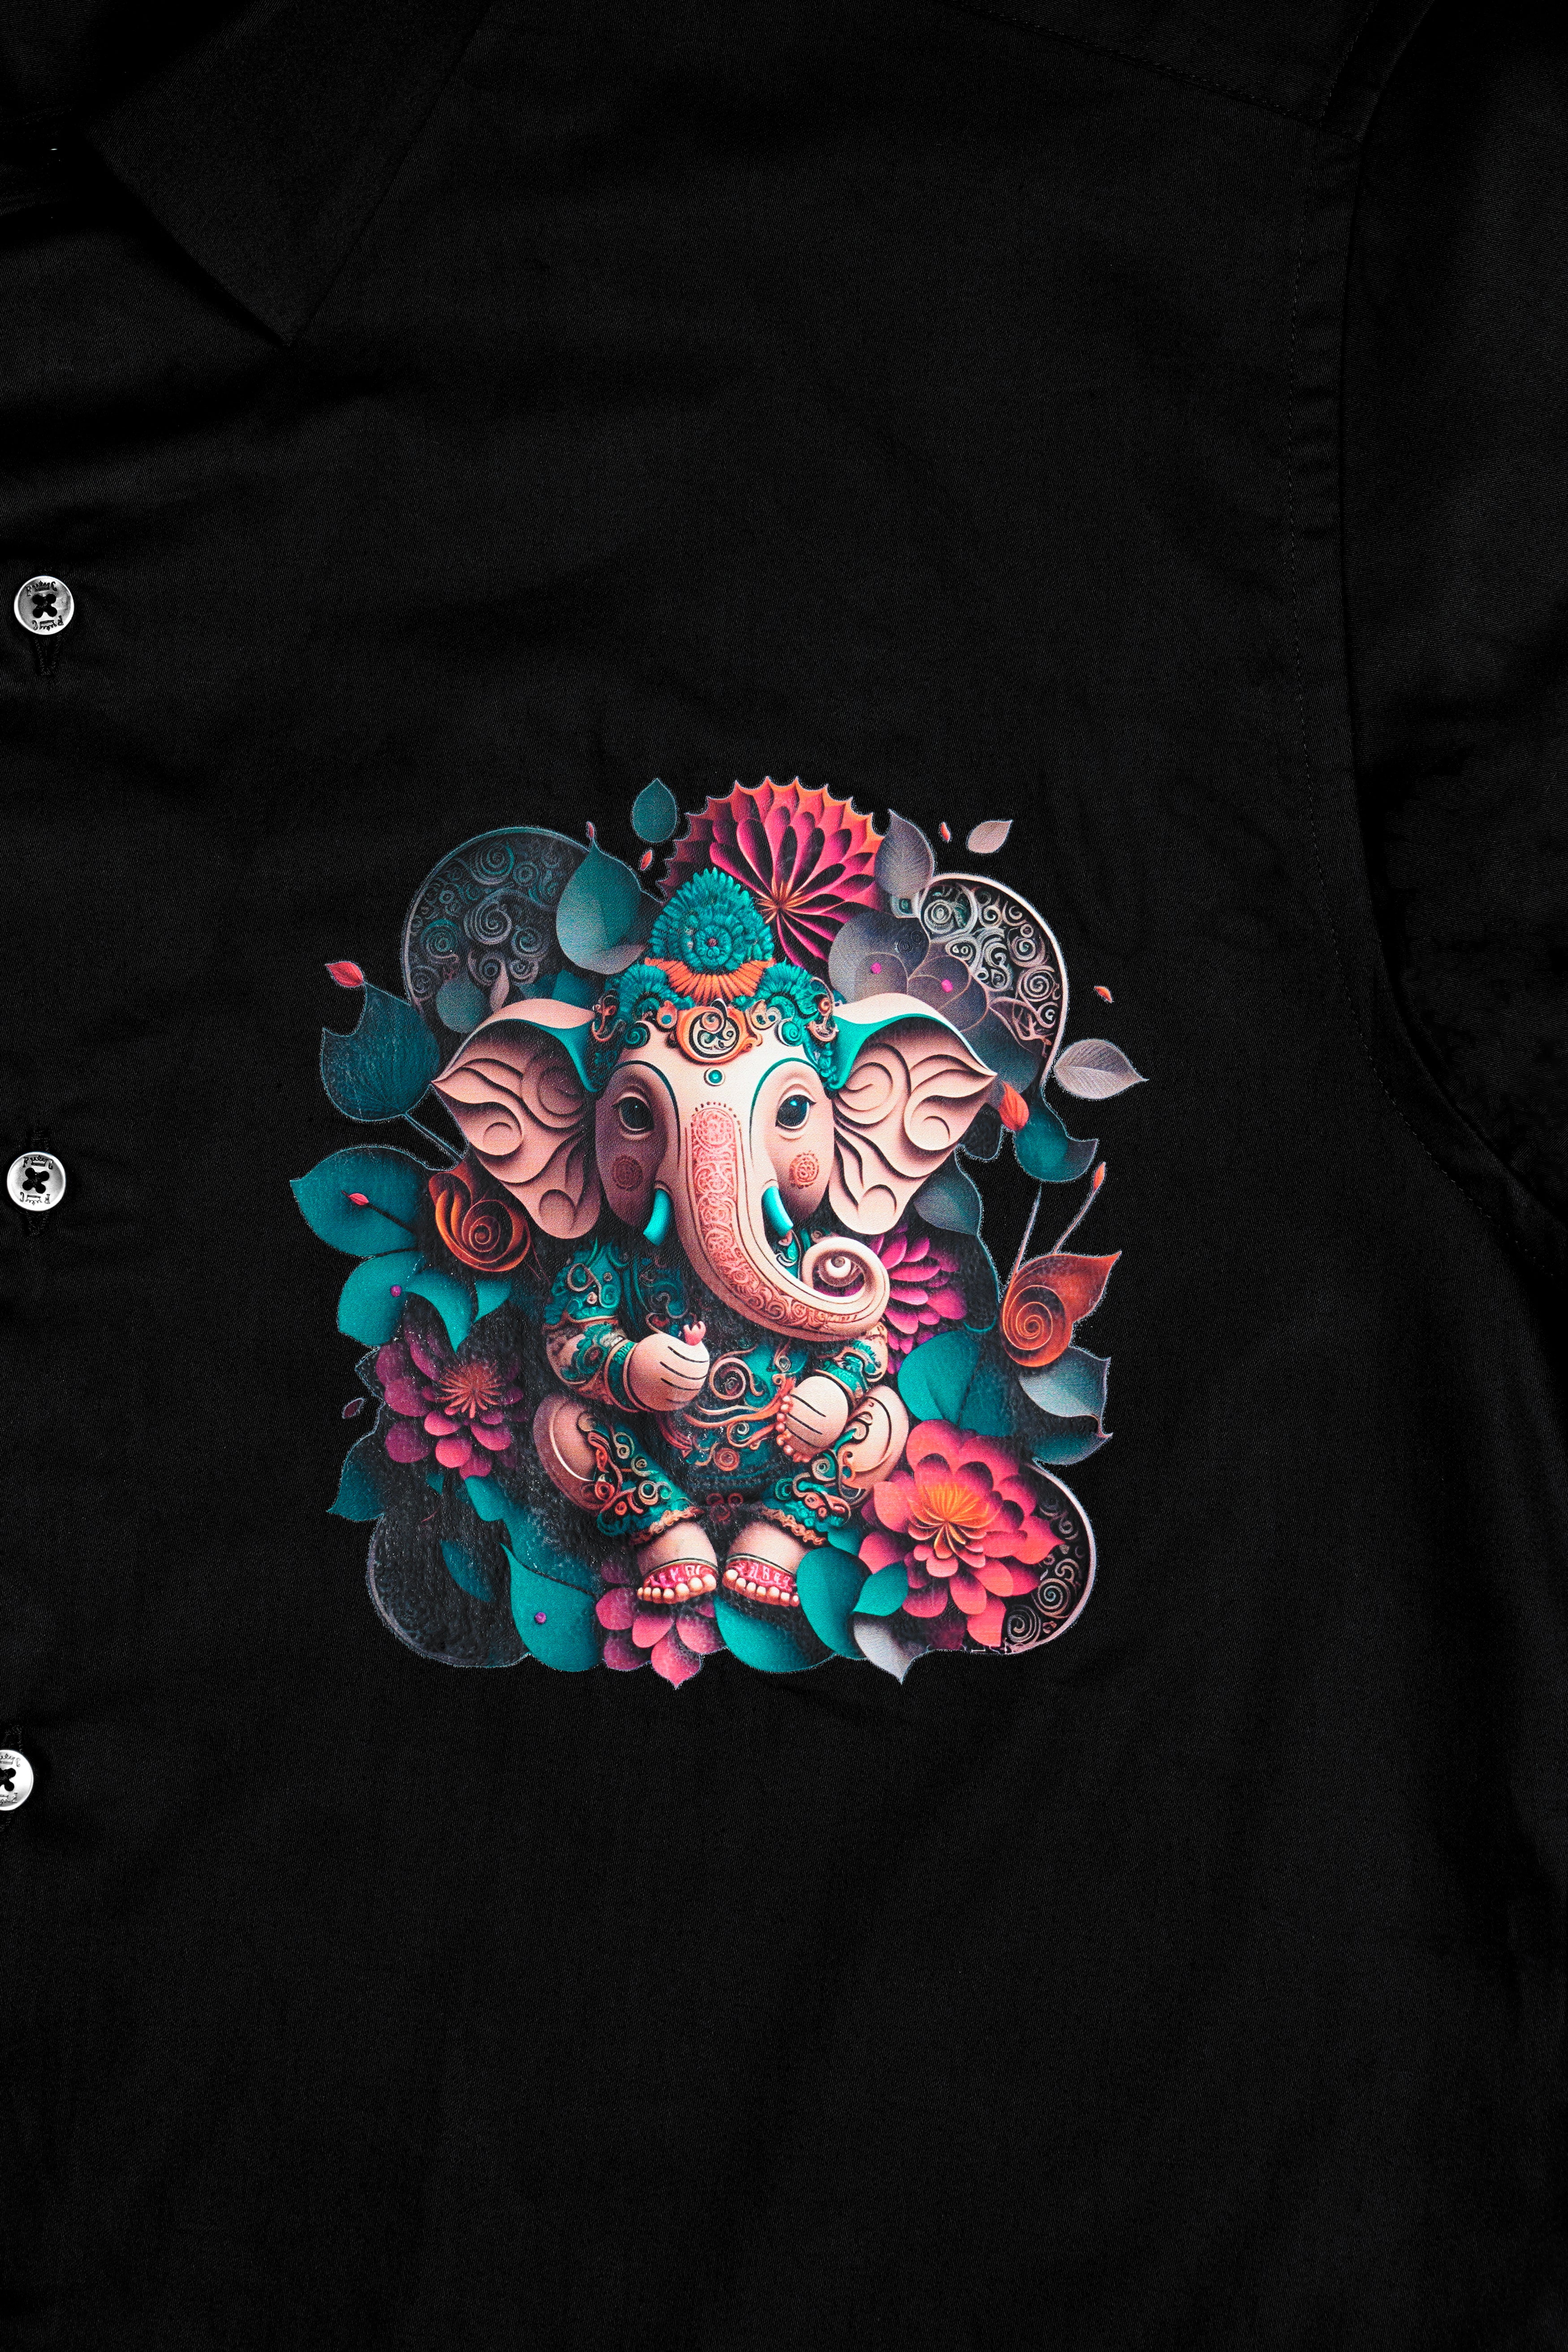 Jade Black Lord Ganesha Printed Subtle Sheen Super Soft Premium Cotton Designer Shirt